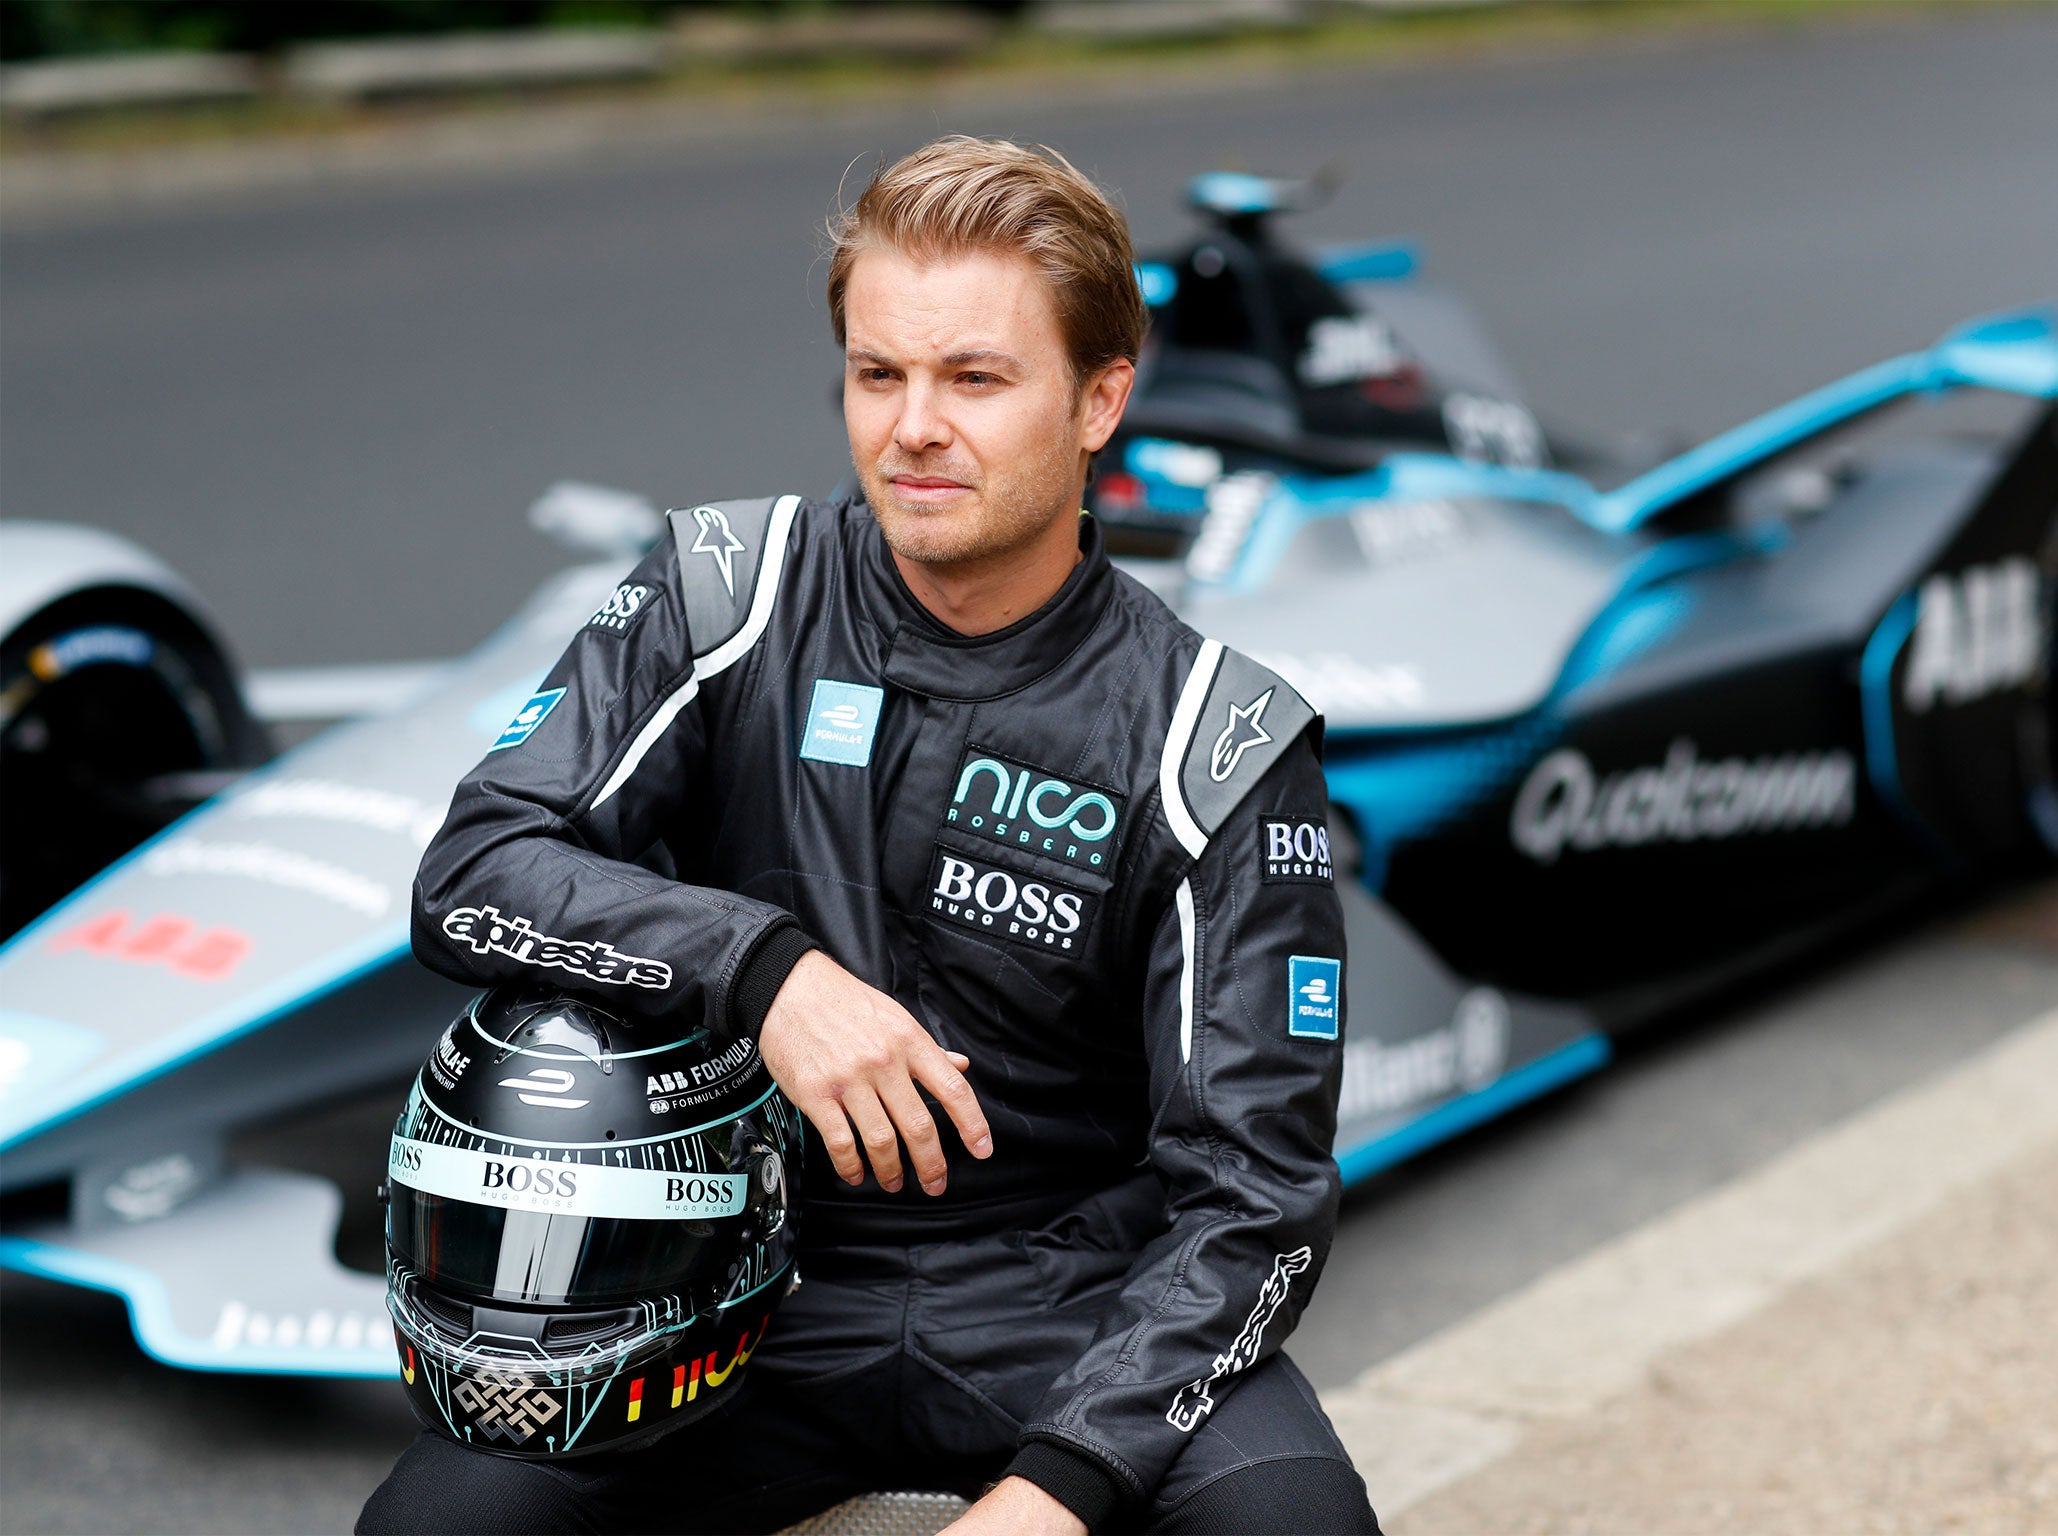 Nico Rosberg will test the Gen2 car in Berlin this weekend